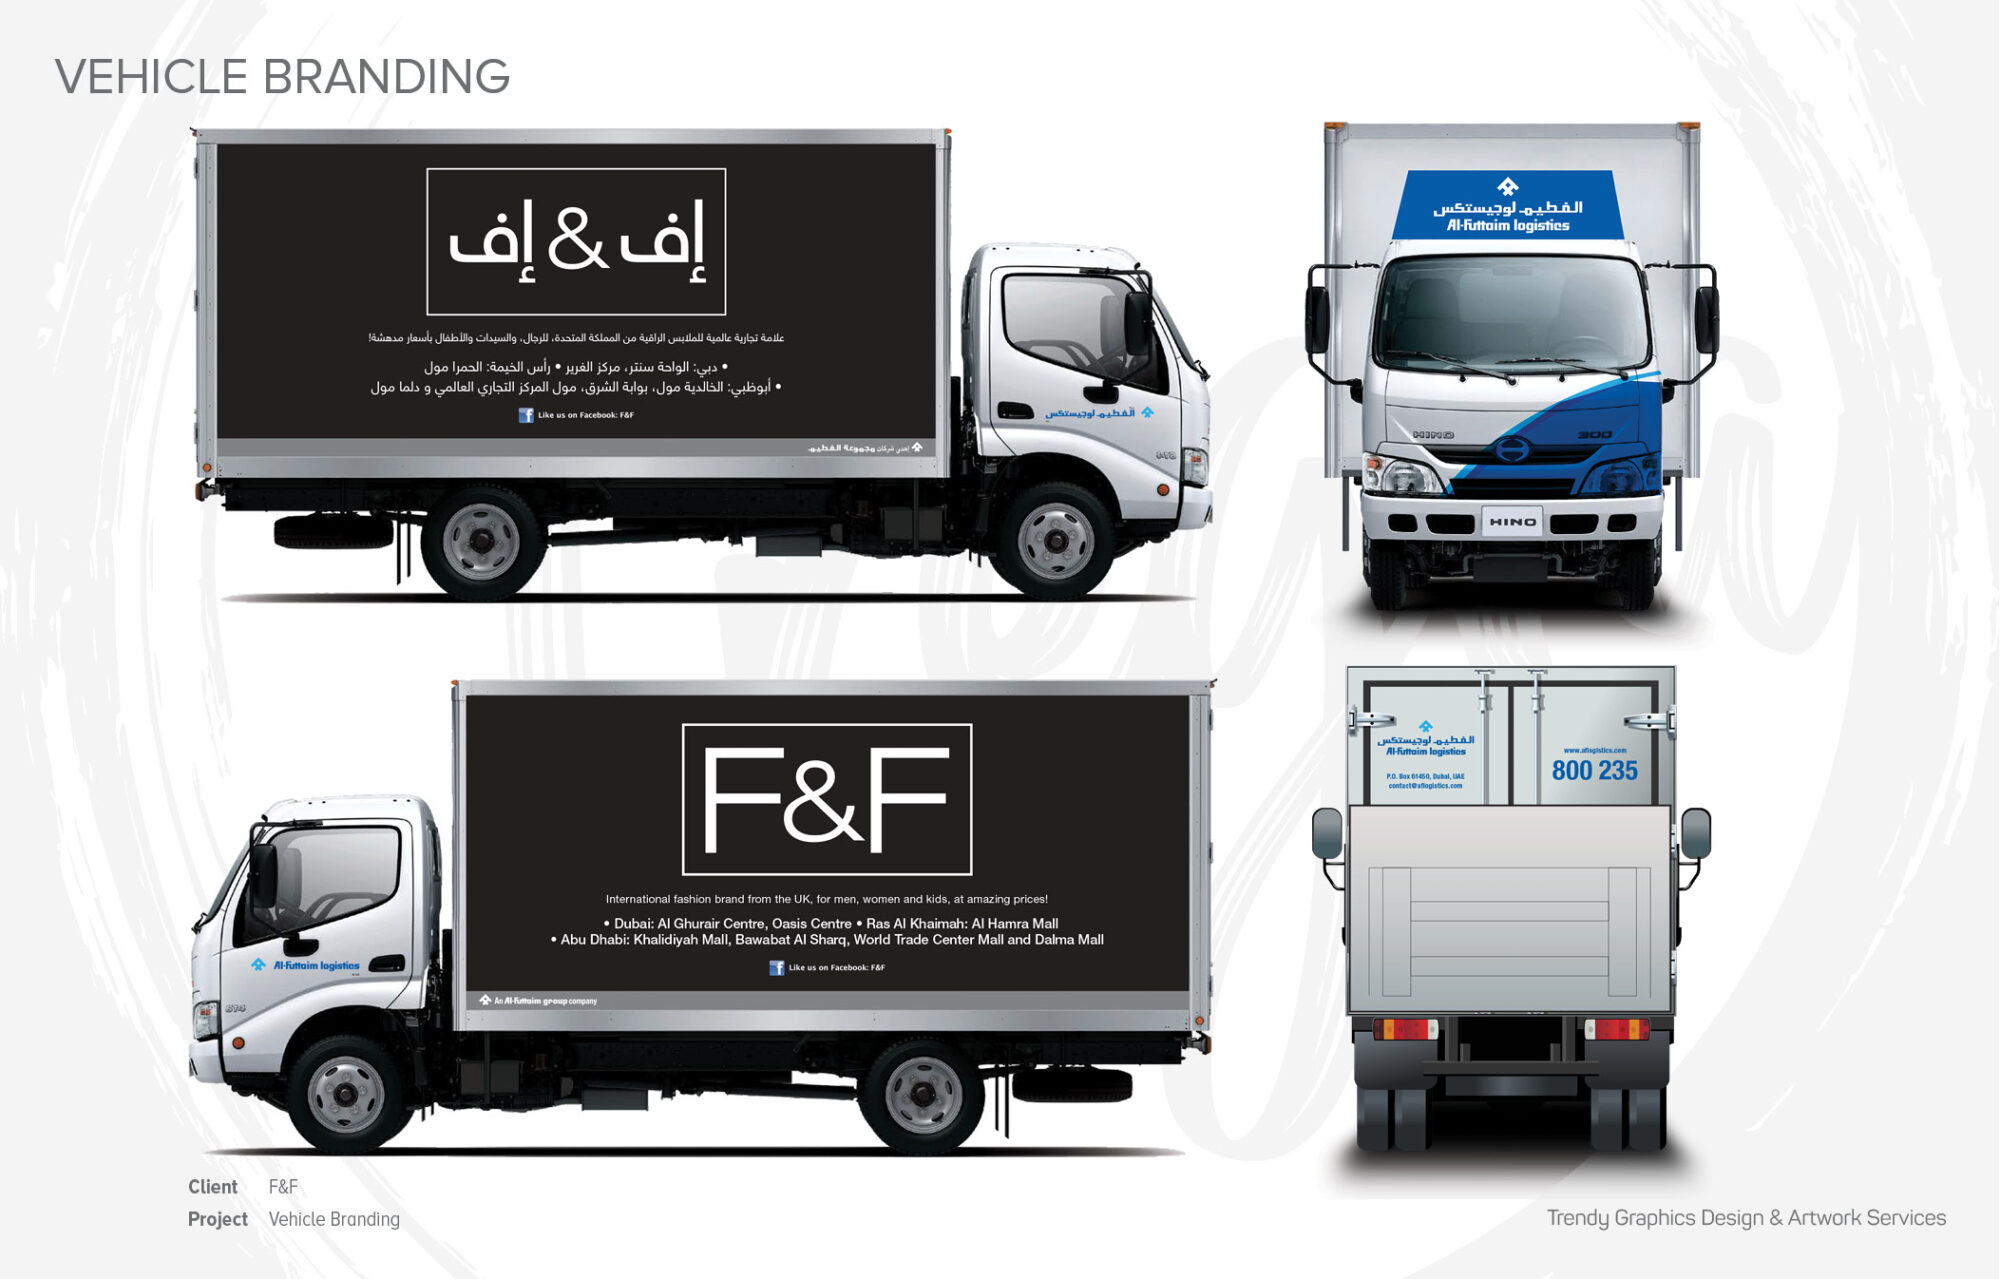 F&F – Vehicle Branding